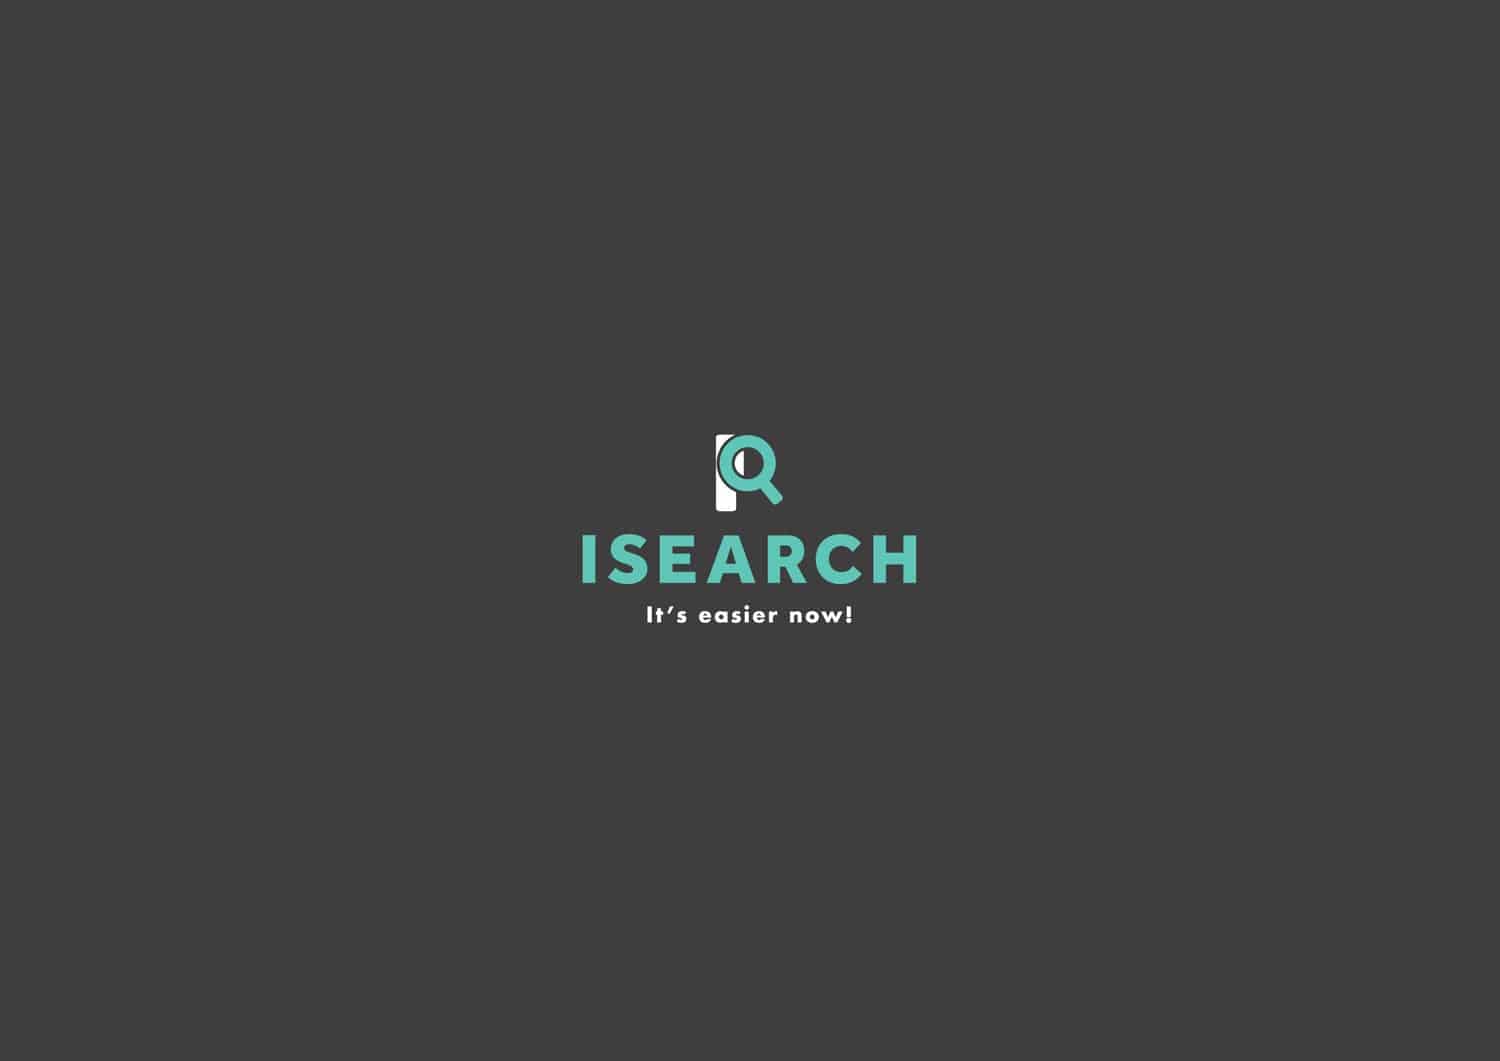 ISEARCH logo color deep gray1